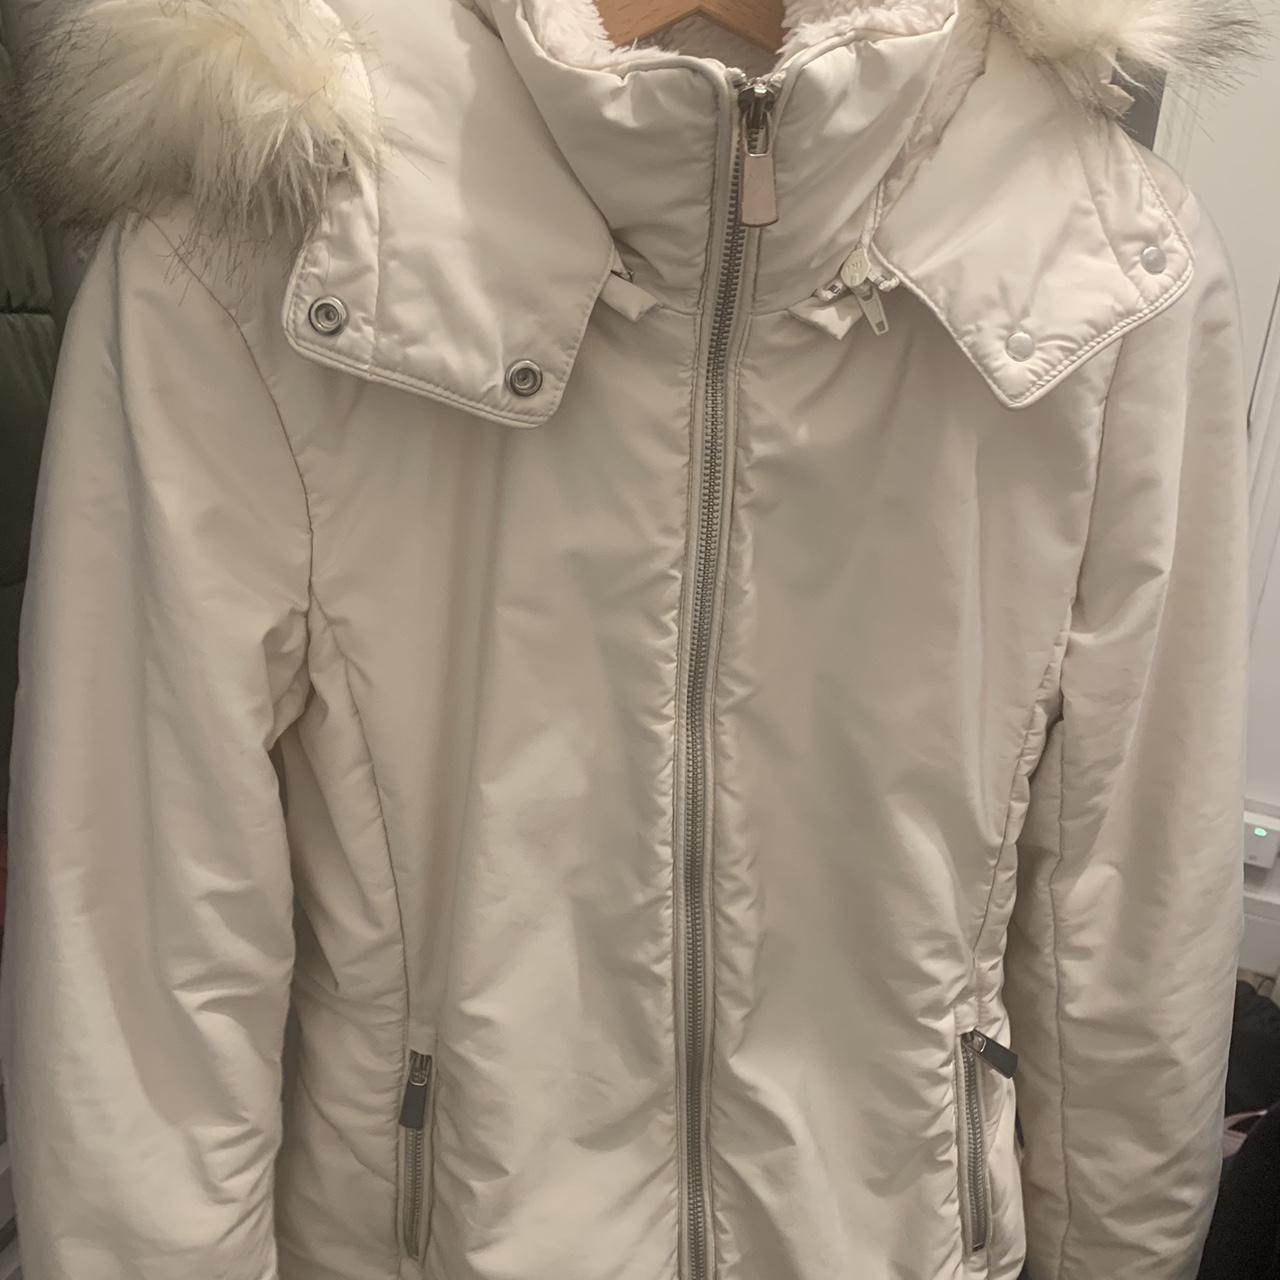 Good condition Zara jacket - Depop